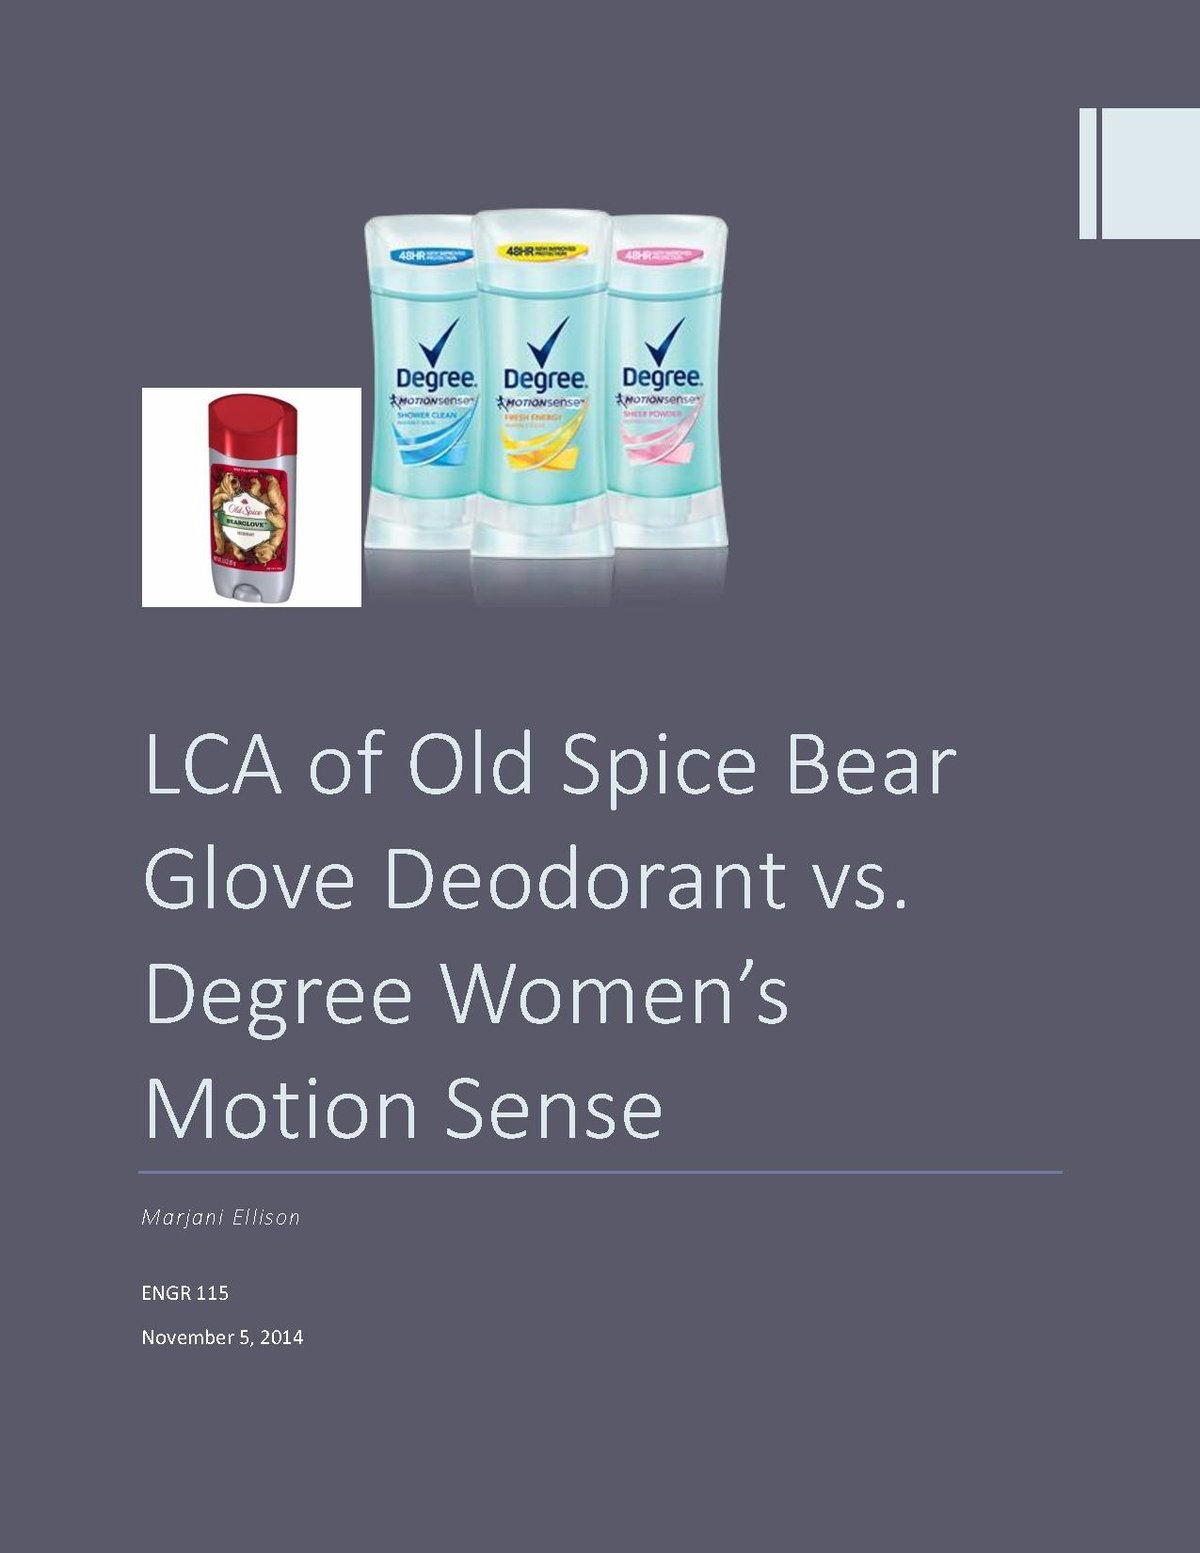 File:LCA of Old Spice Deodorant vs.pdf - Appropedia, the sustainability wiki